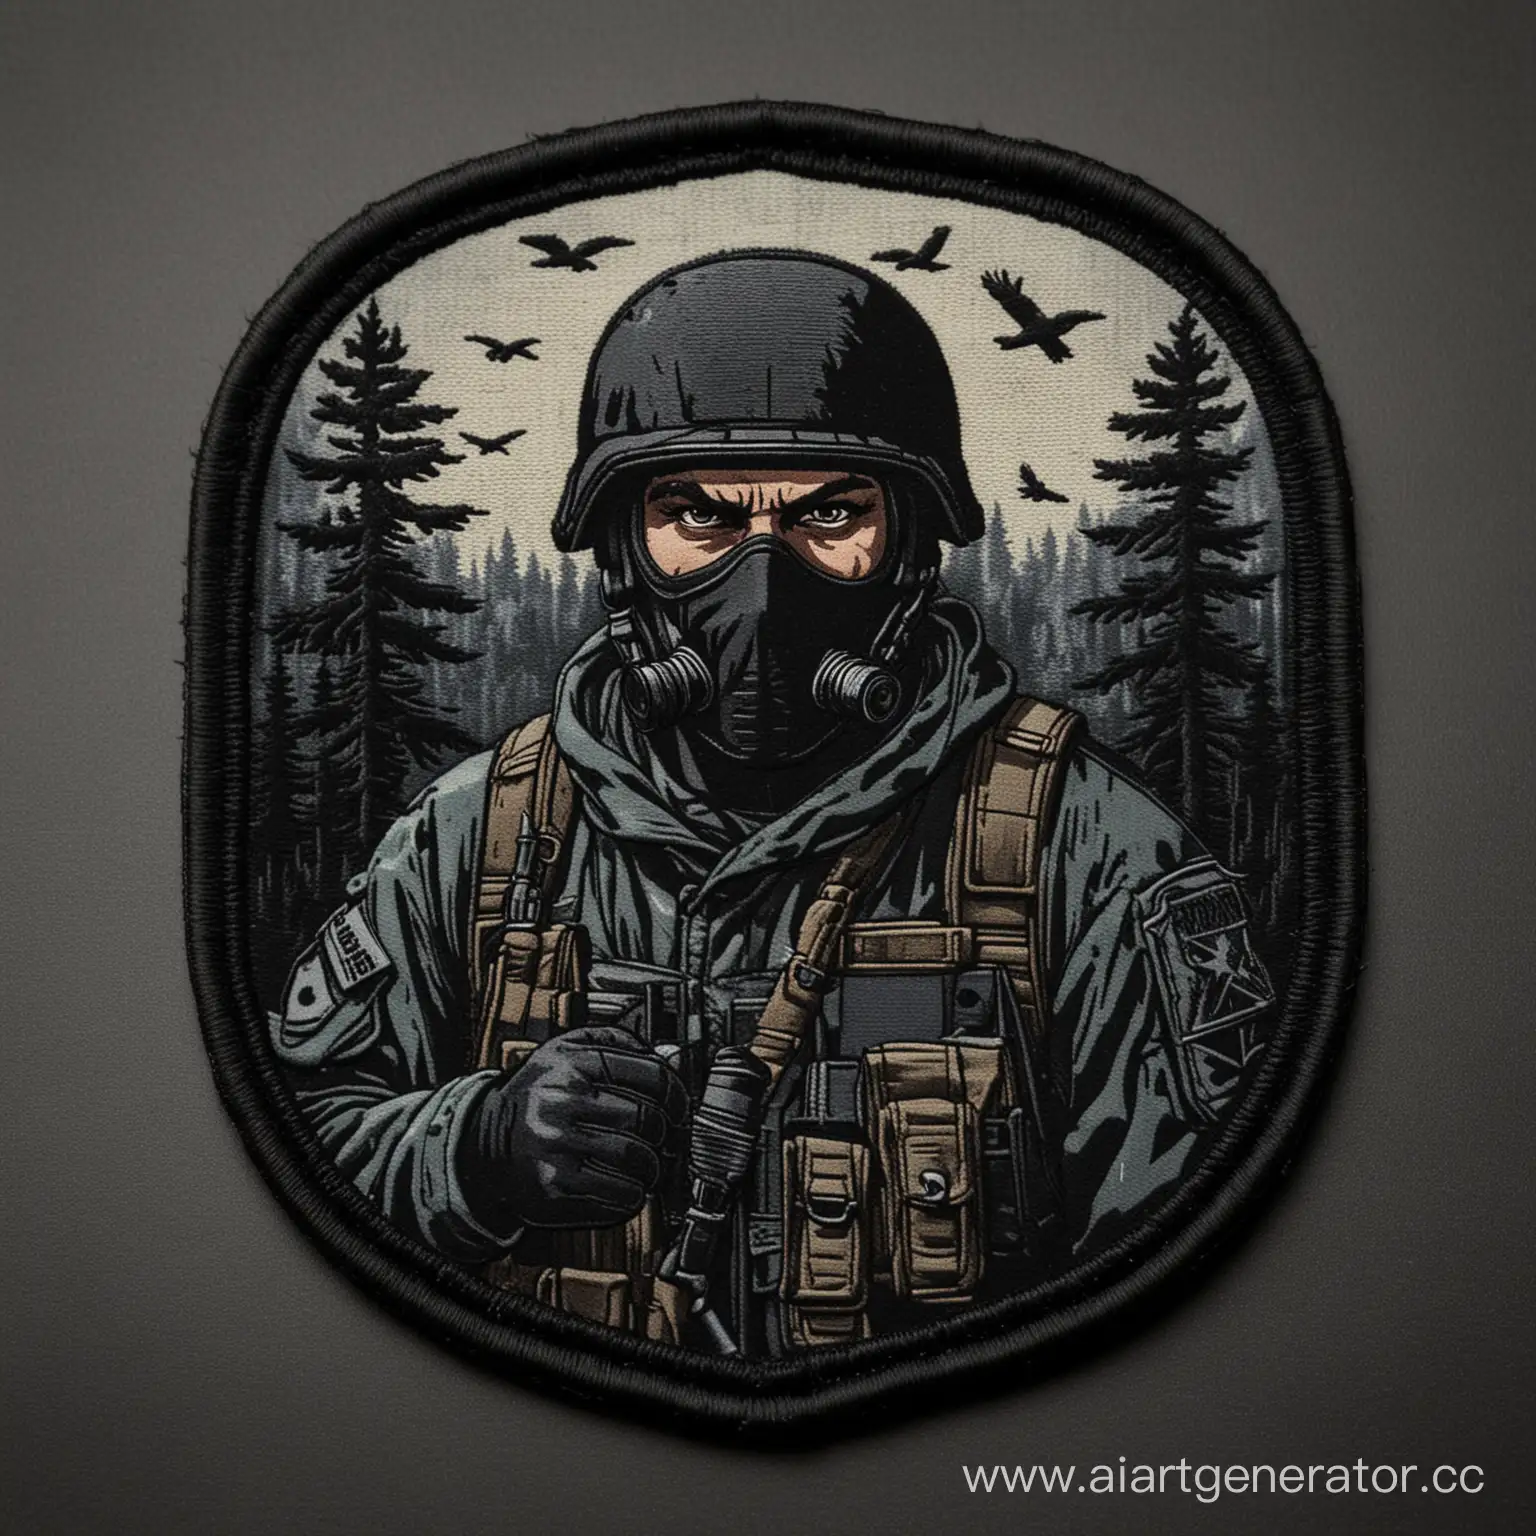 Military-Stalker-Patch-Against-Dark-Forest-Background